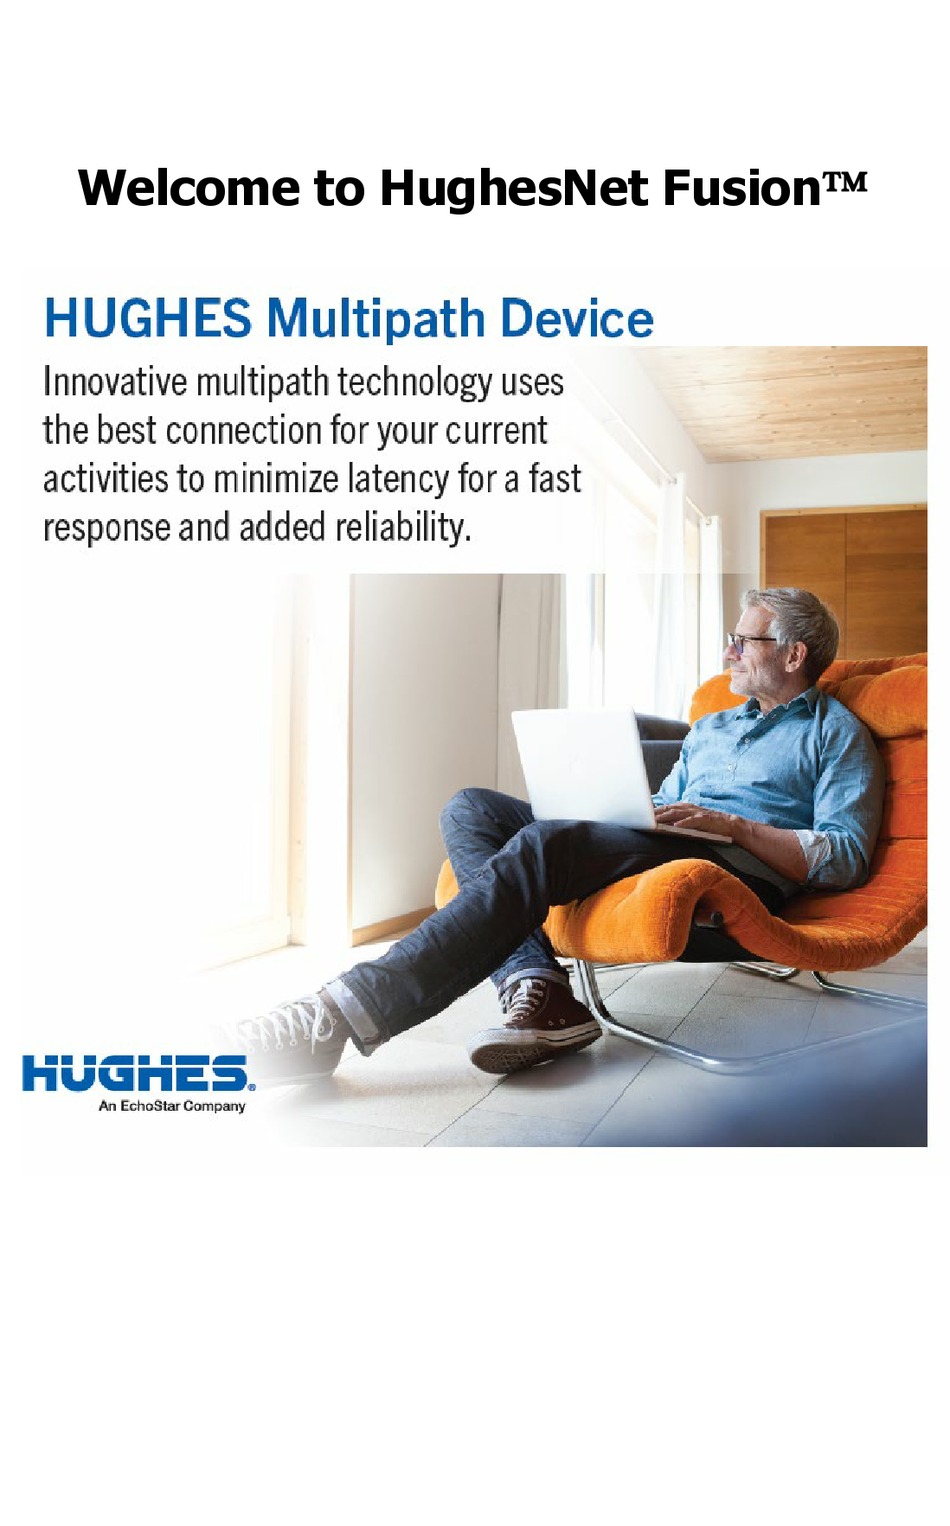 hughes-hughesnet-fusion-multipath-instructions-manual-pdf-download-manualslib